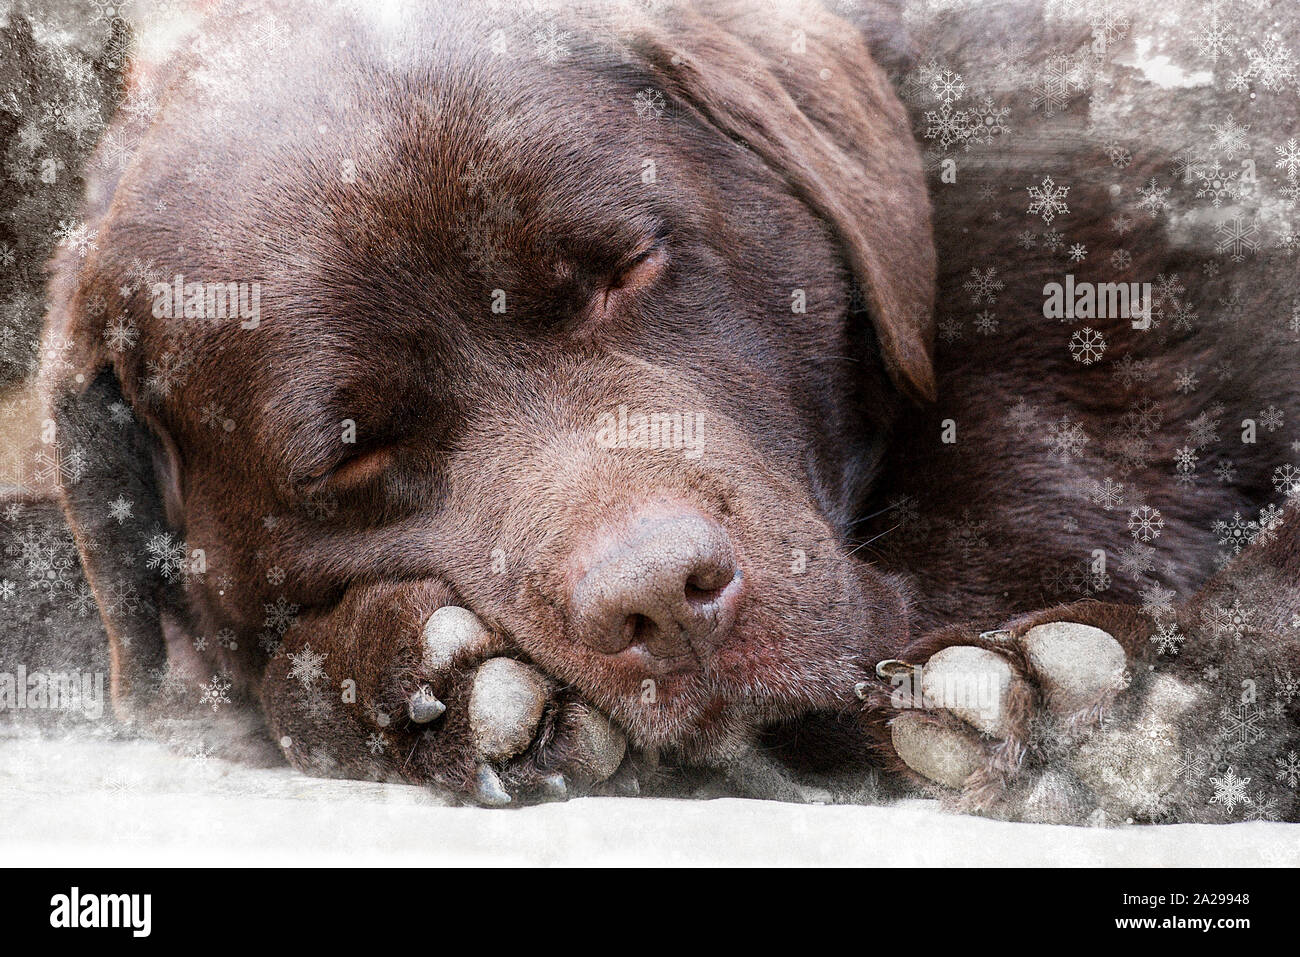 Sleeping chocolate Labrador Dog surrounded with snow Stock Photo